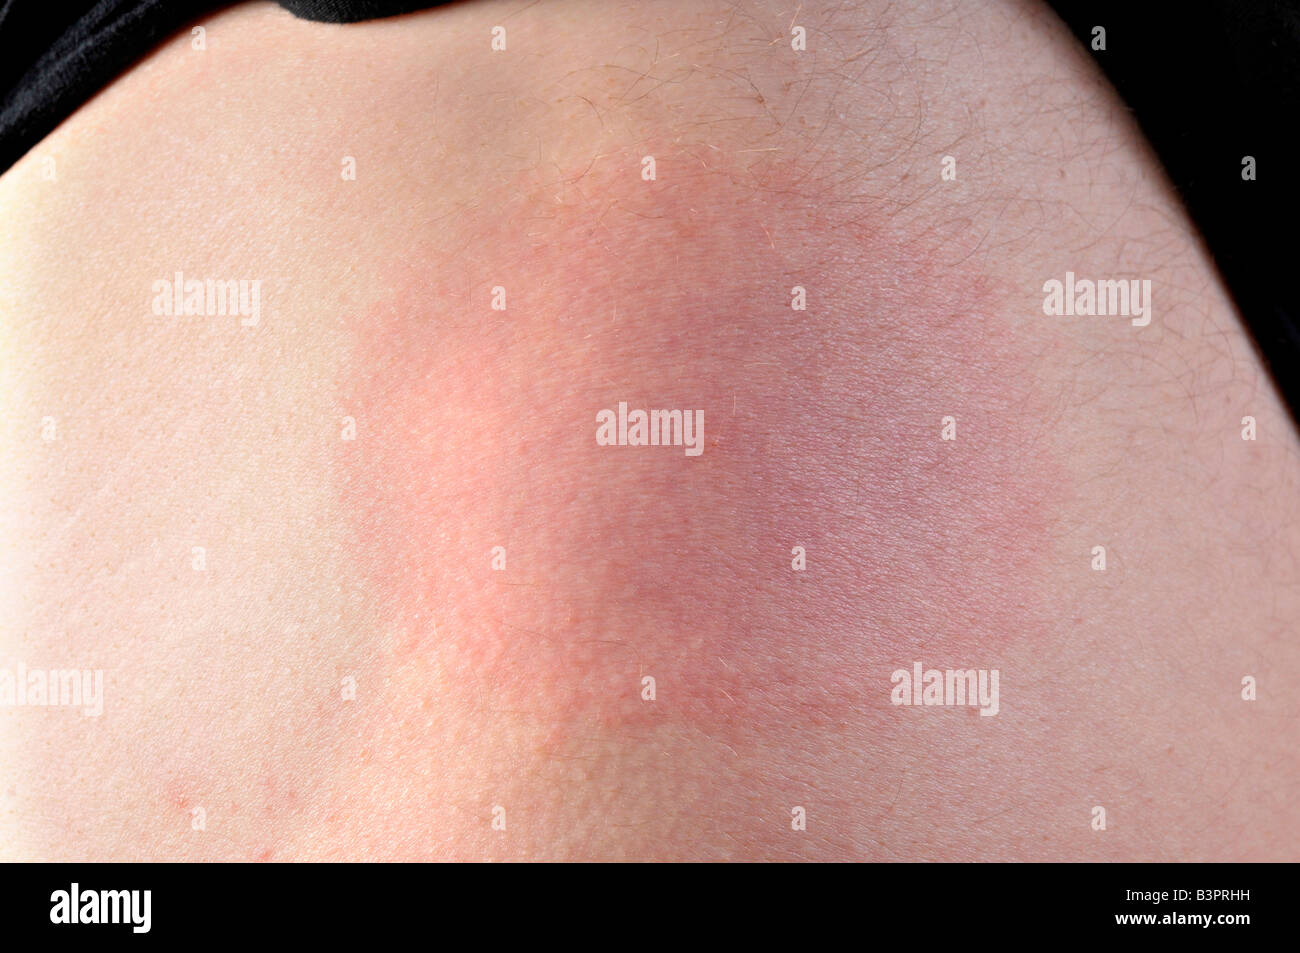 Skin rash, Erythema migrans, following a tick bite Stock Photo